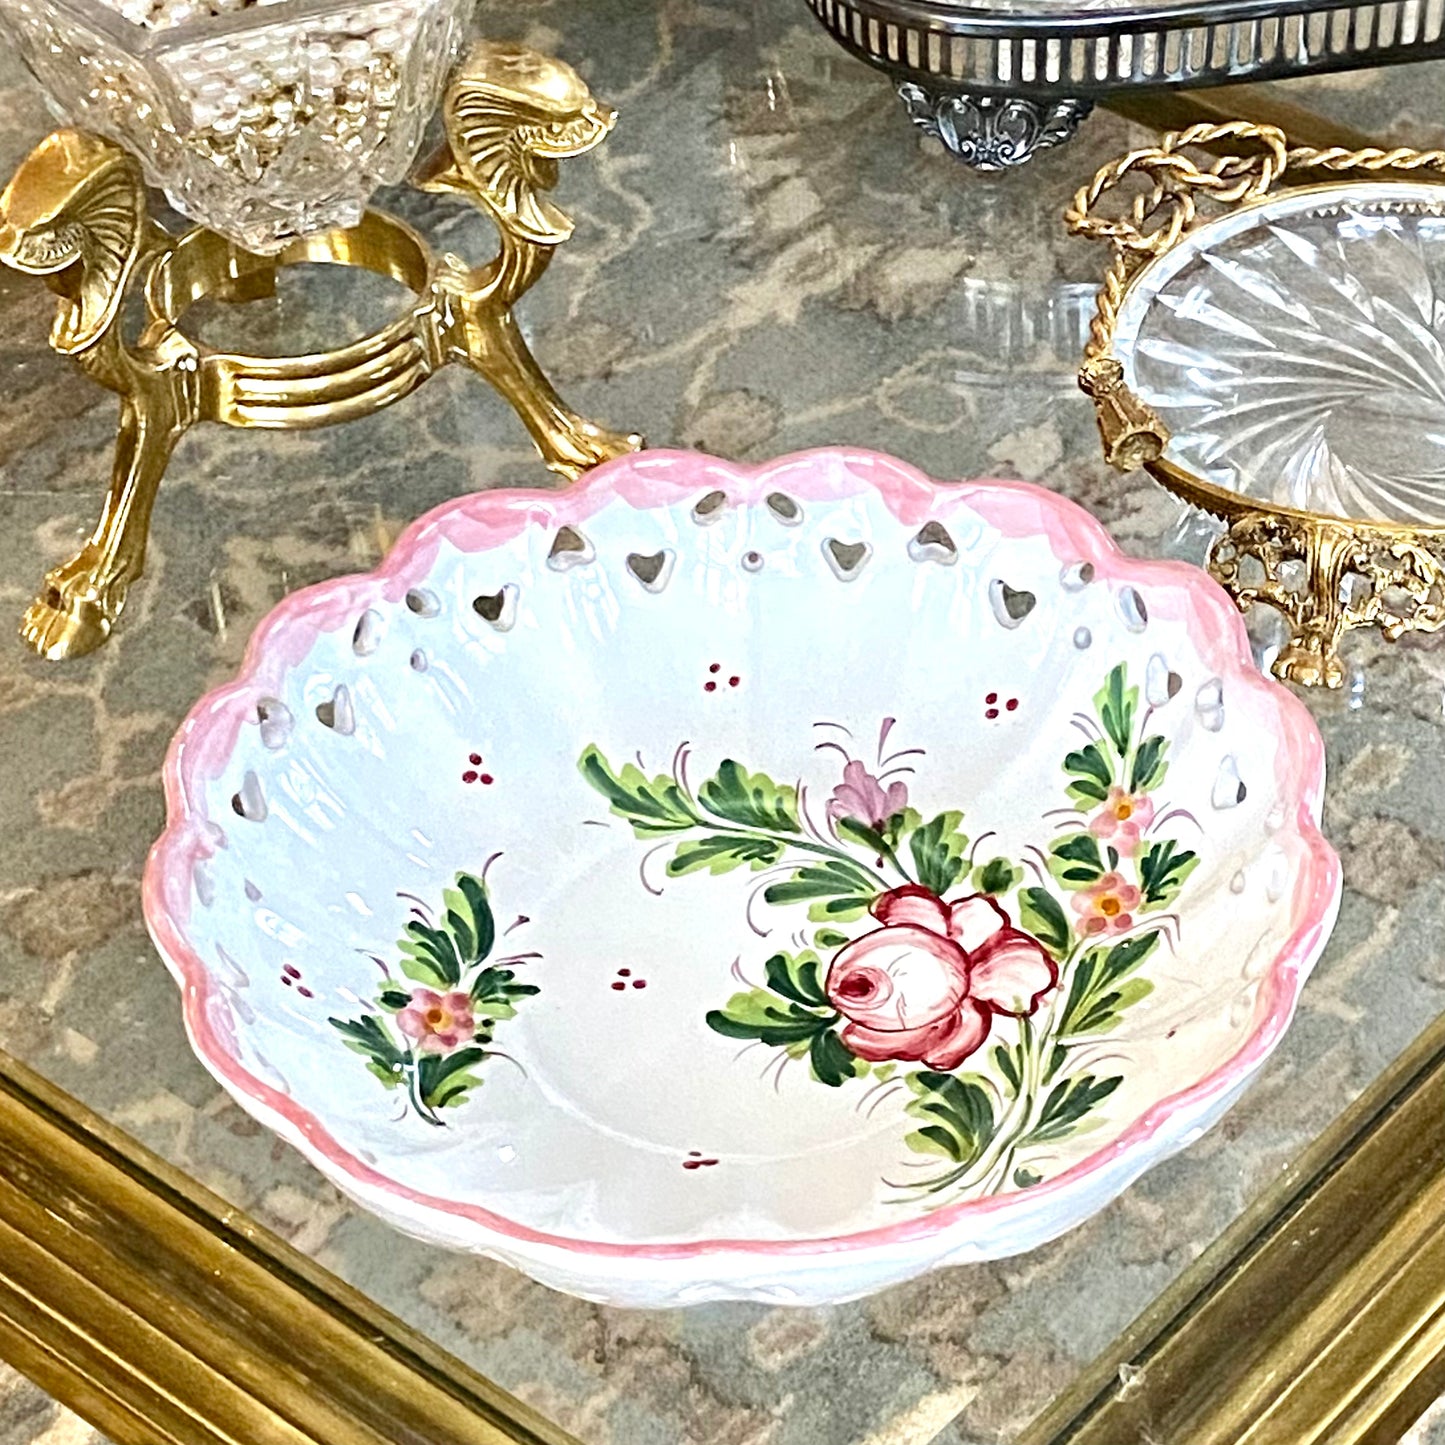 Gorgeous hand painted Italian large bowl.